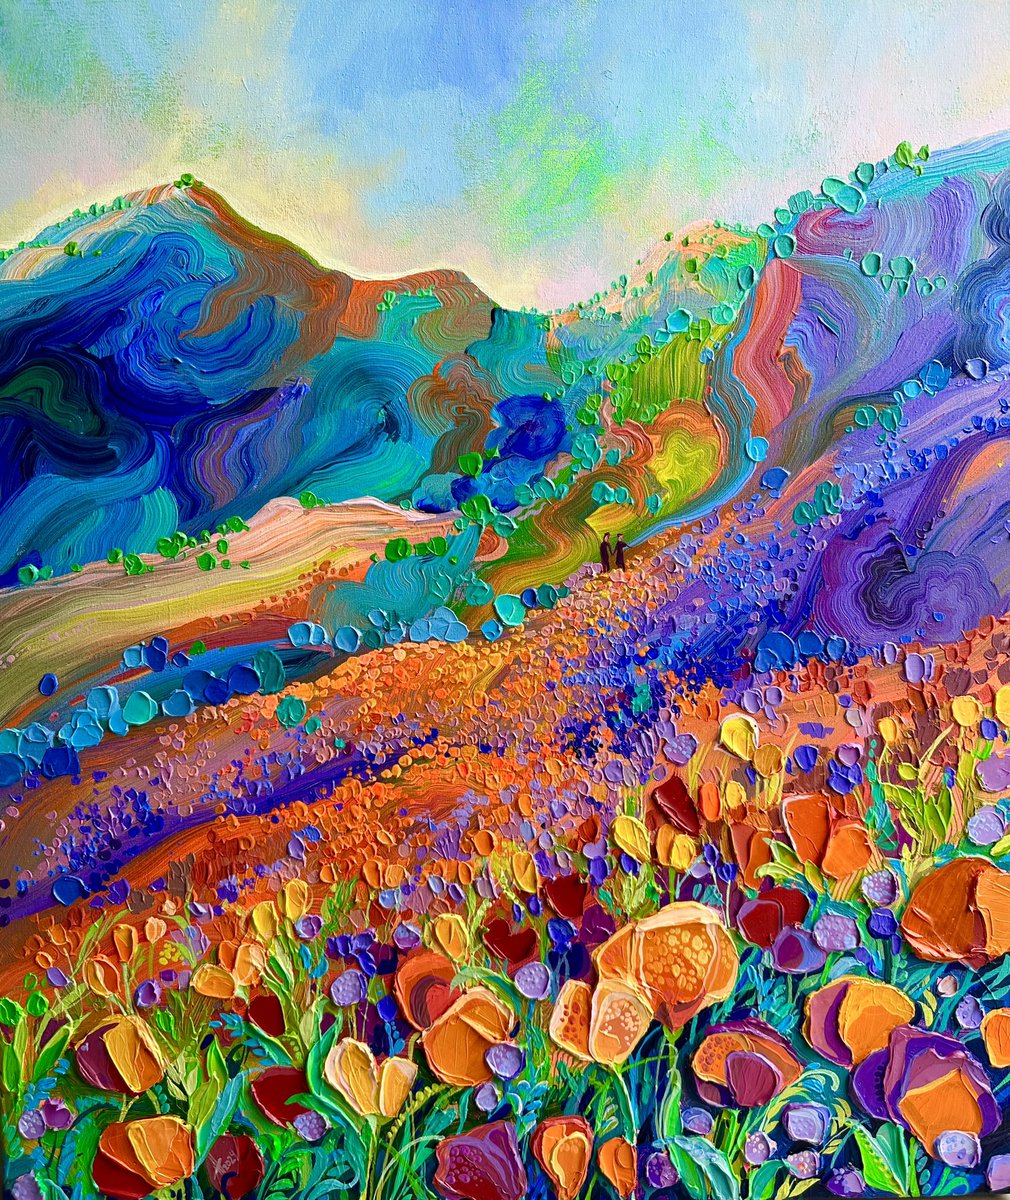 acrylic, canvas 60*70 cm “Alpine meadows, fantasies”